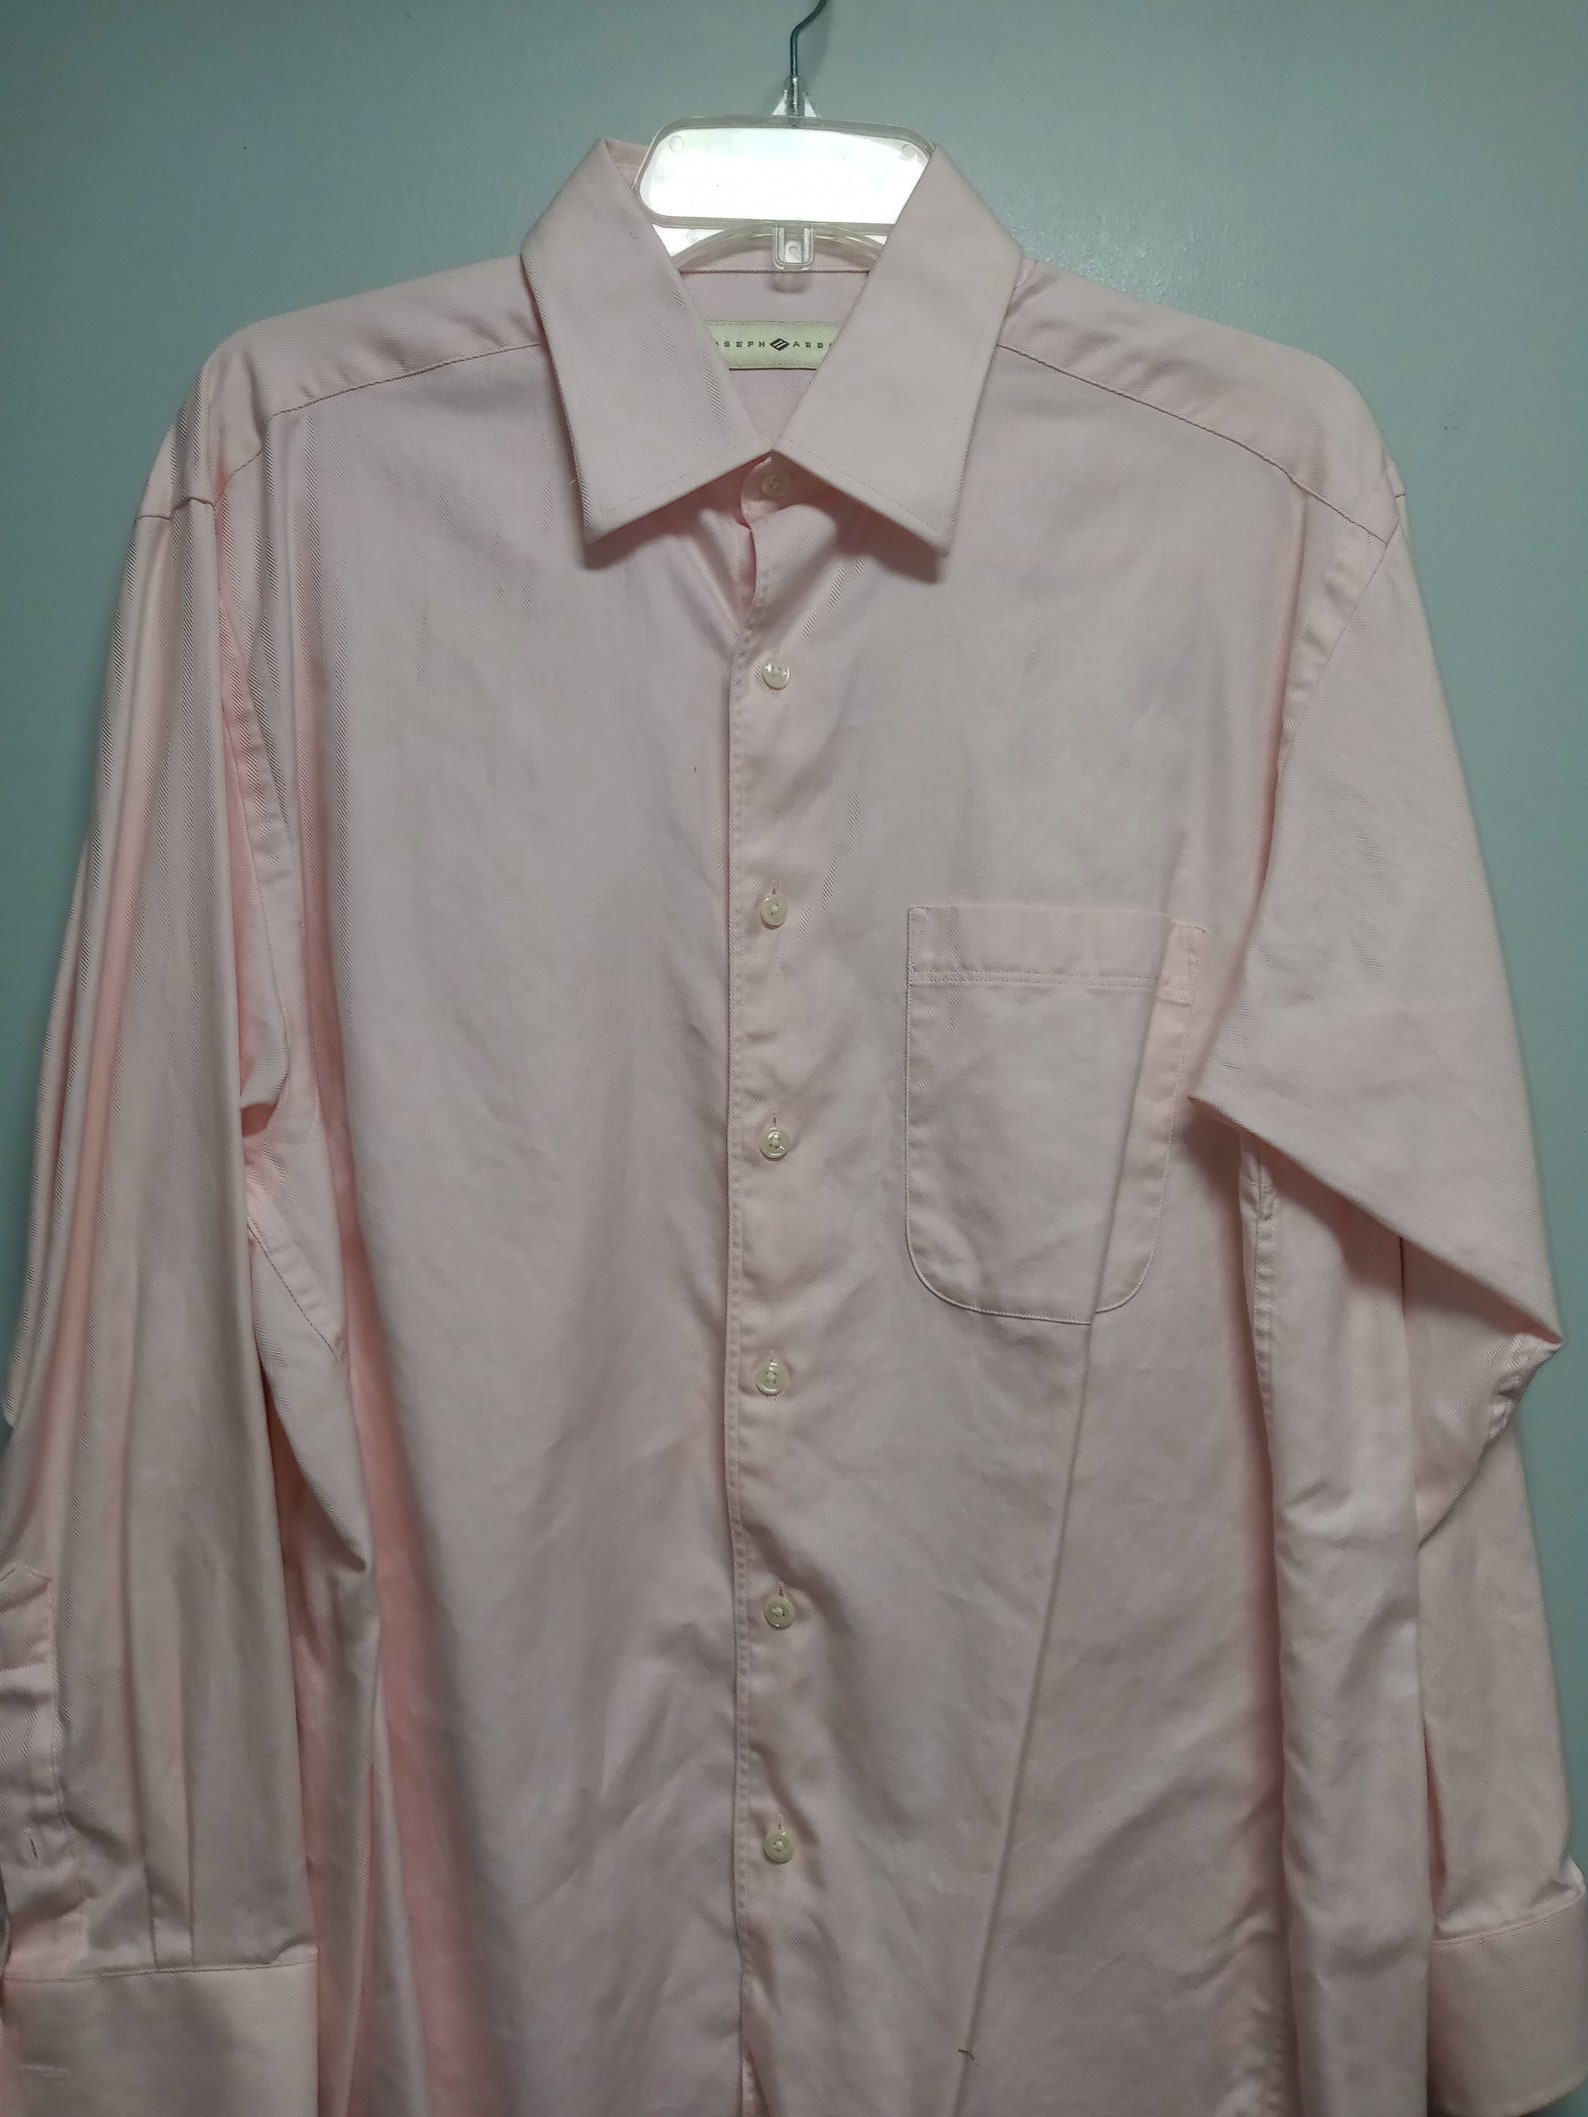 Vintage Mens Long Sleeve Shirt by JOSEPH ABBOUD | Etsy